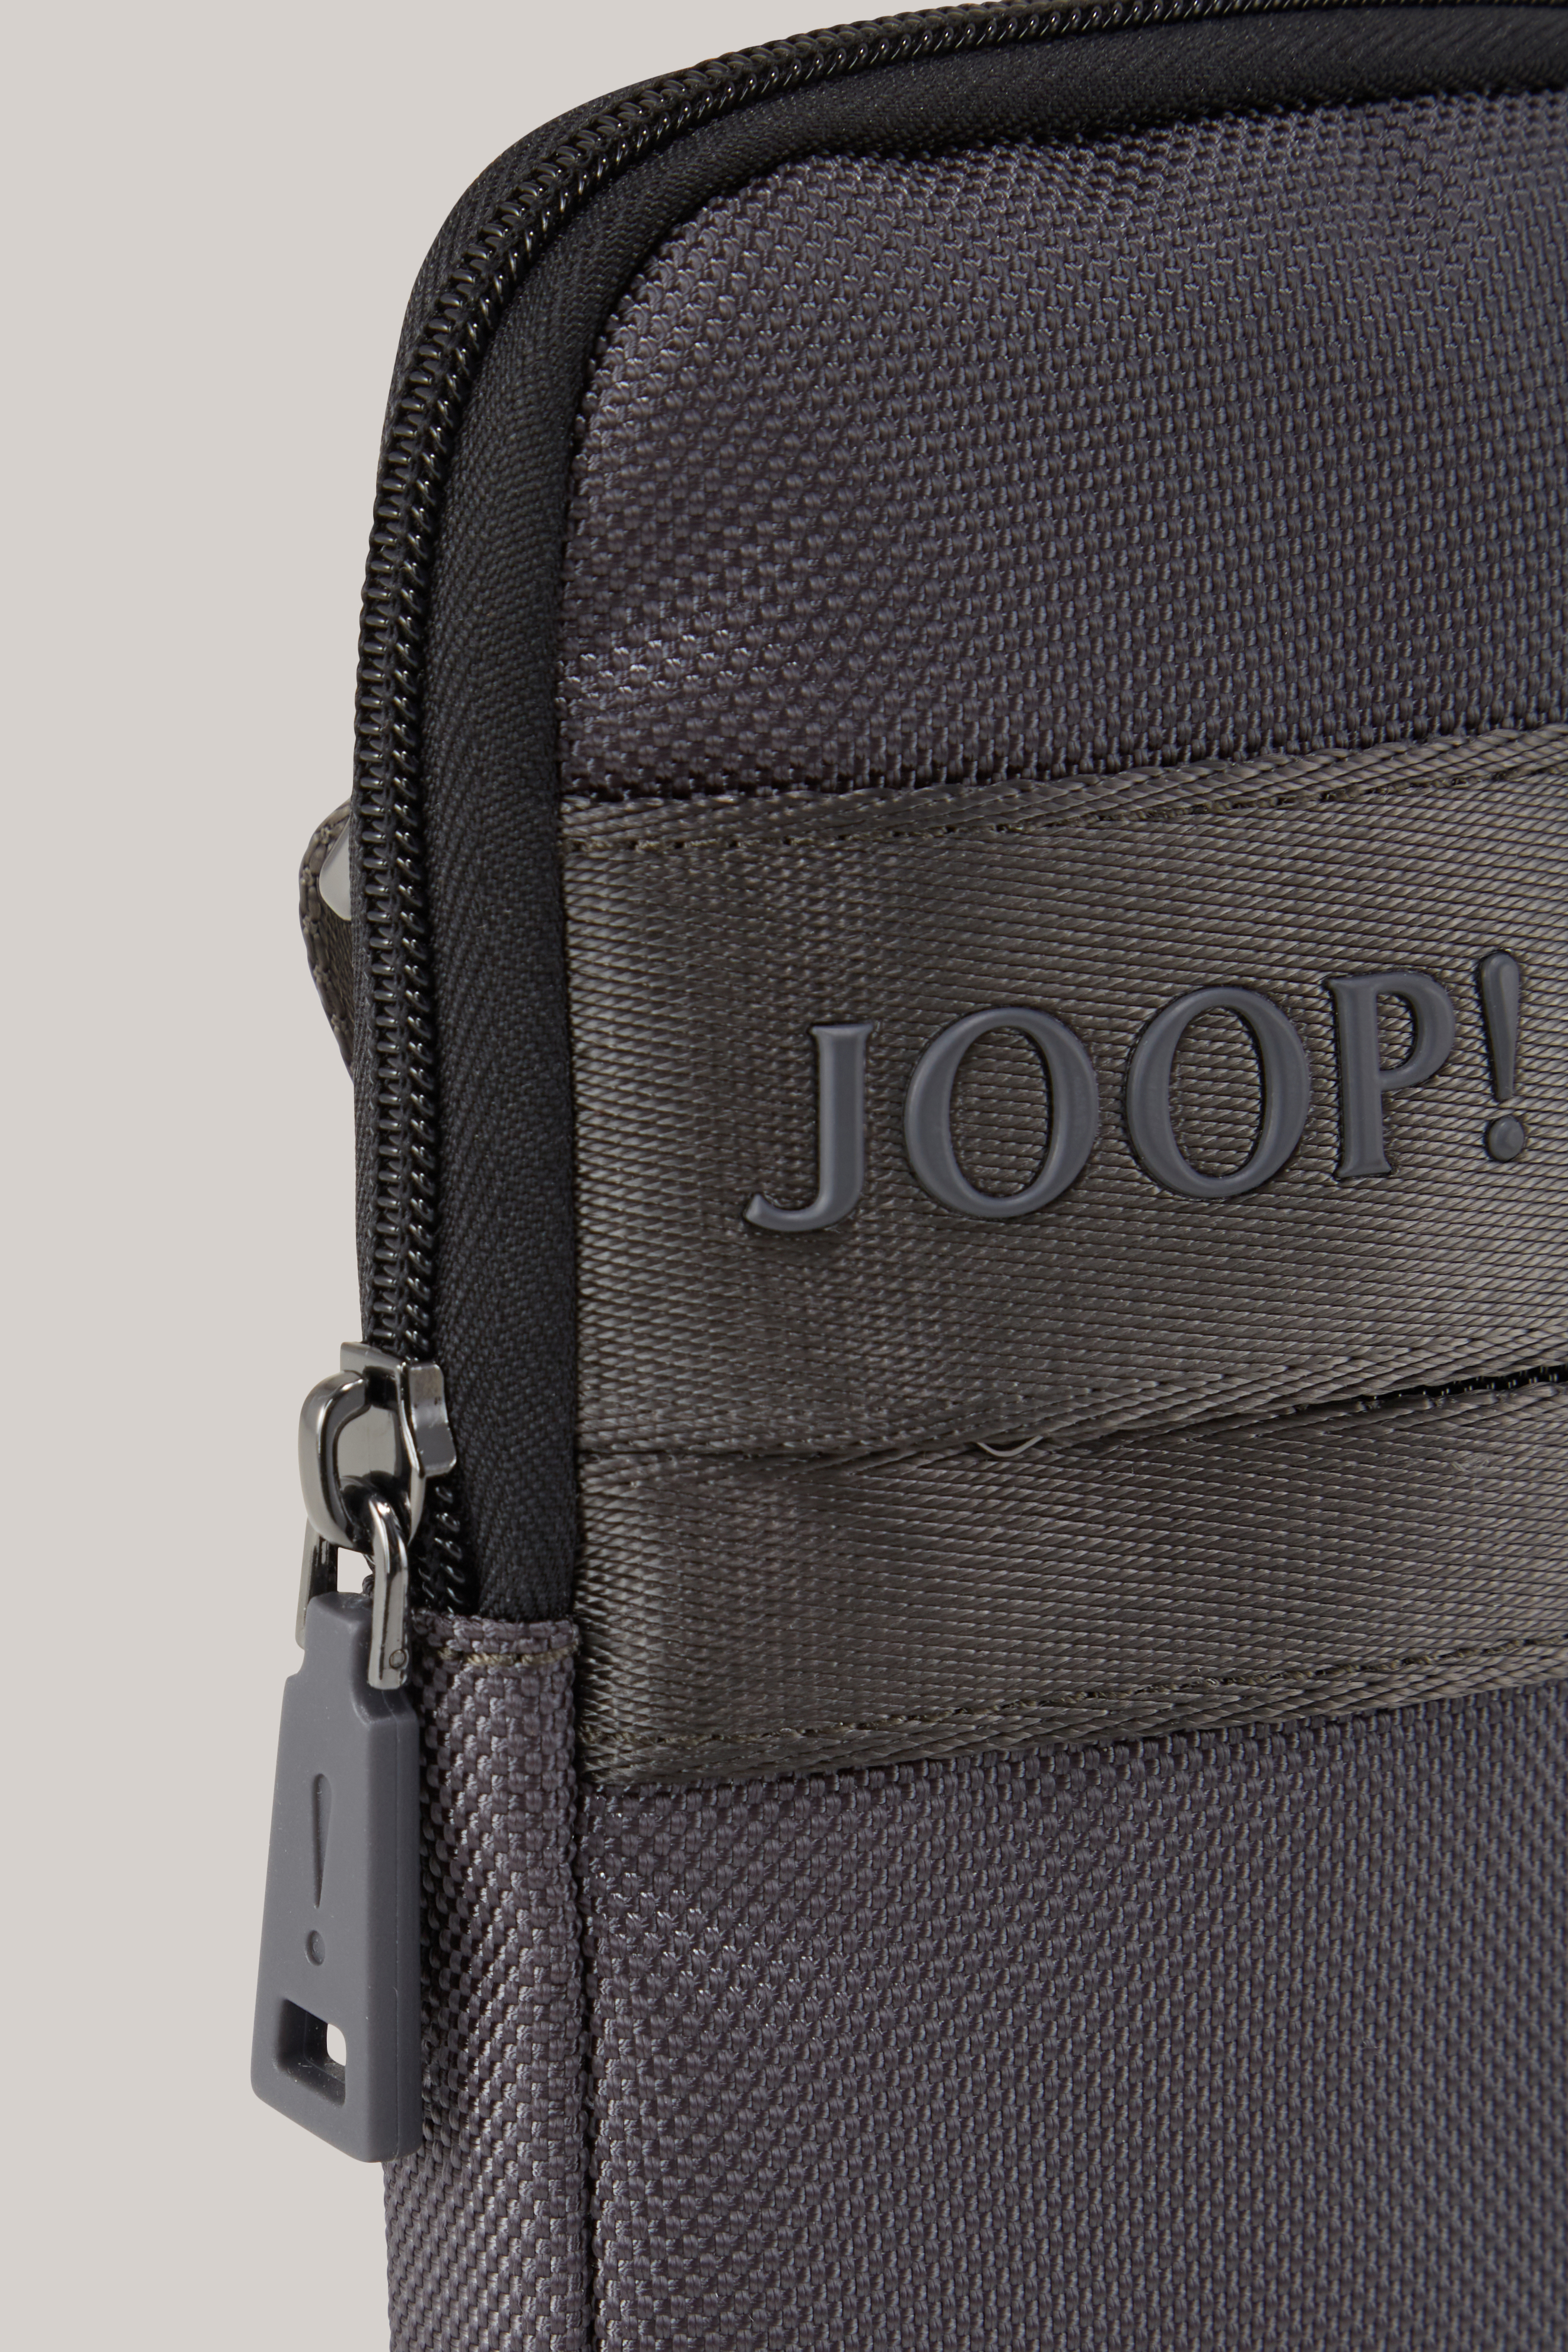 Bag - in JOOP! in Dark Grey Shoulder Shop Online the Modica Rafael